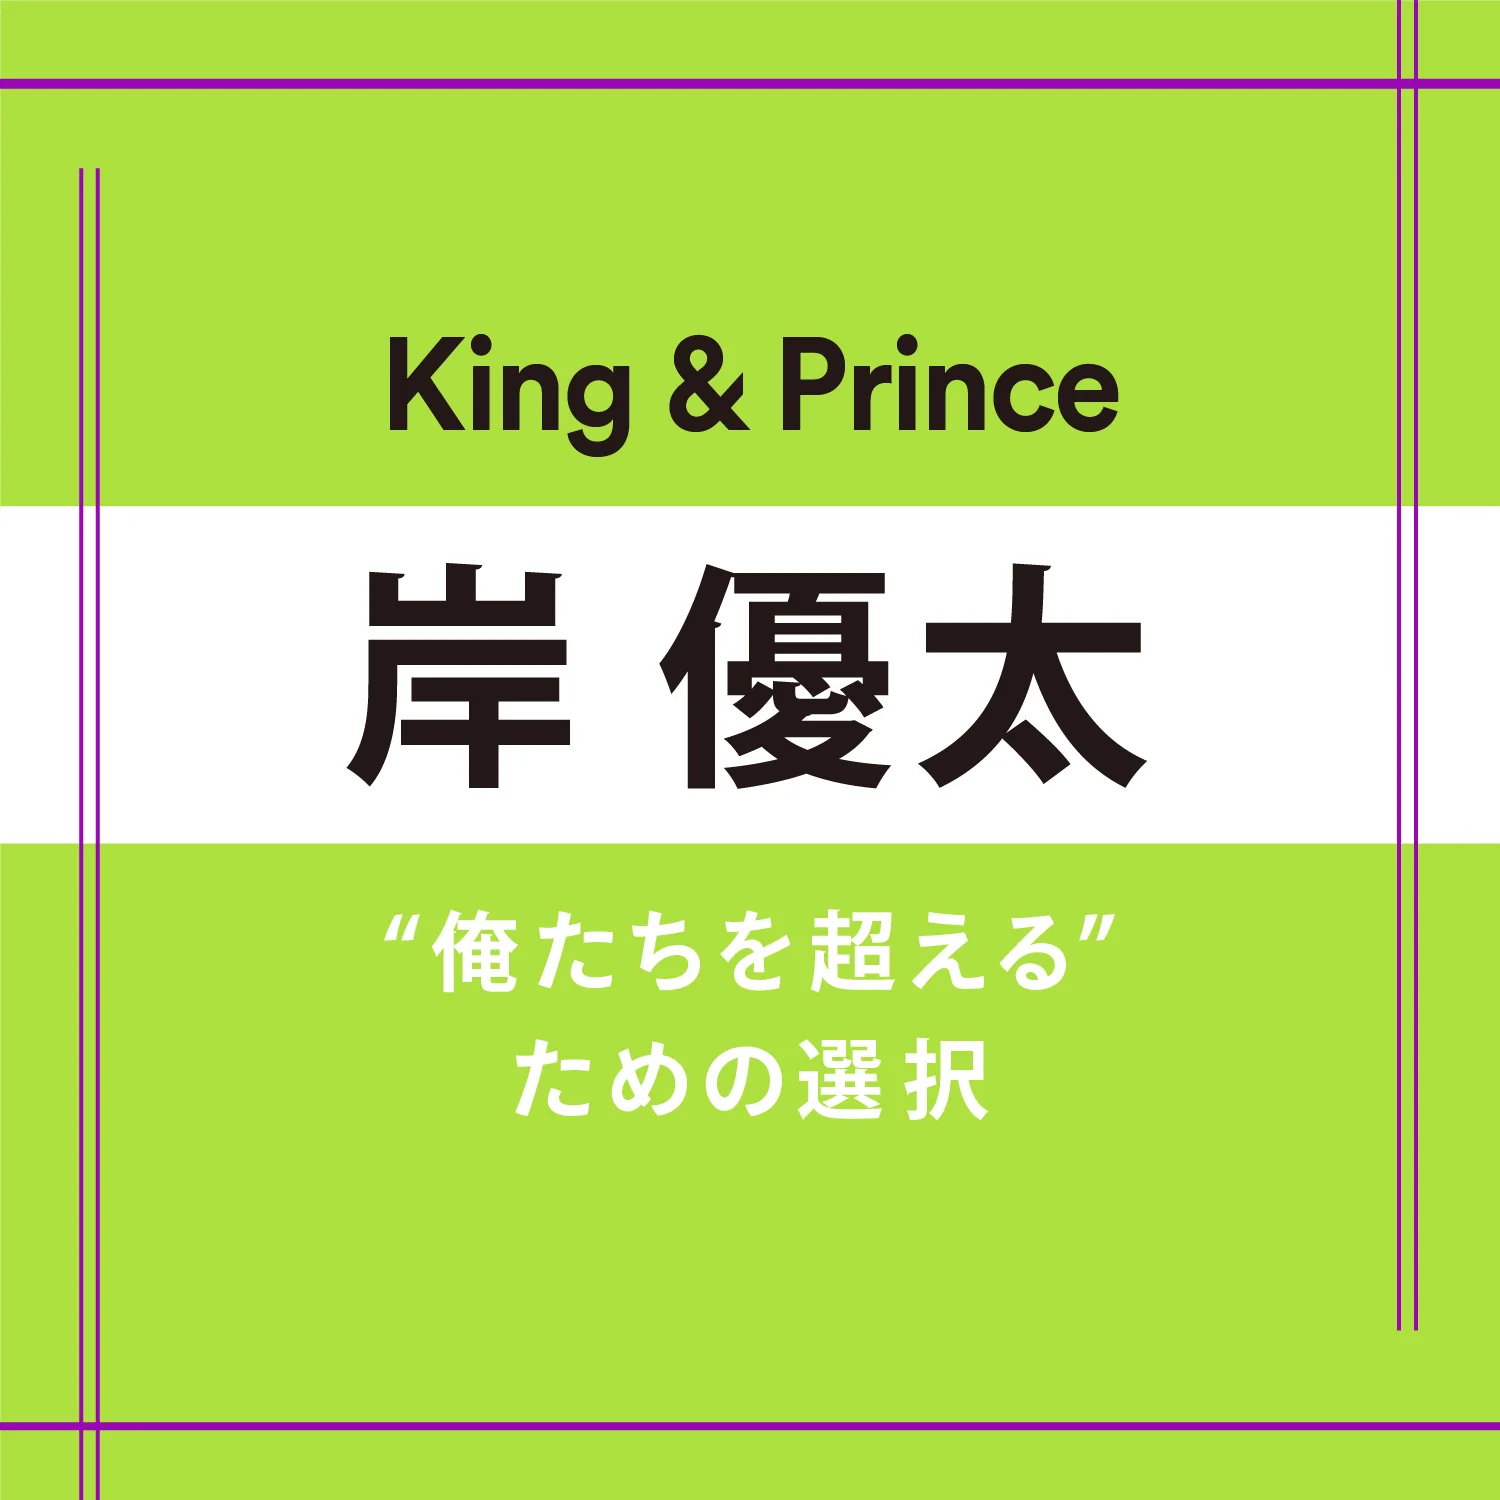 【King &amp; Prince】岸 優太さん「優柔不断な僕は、選択を前にするととても面倒くさい男になります」 